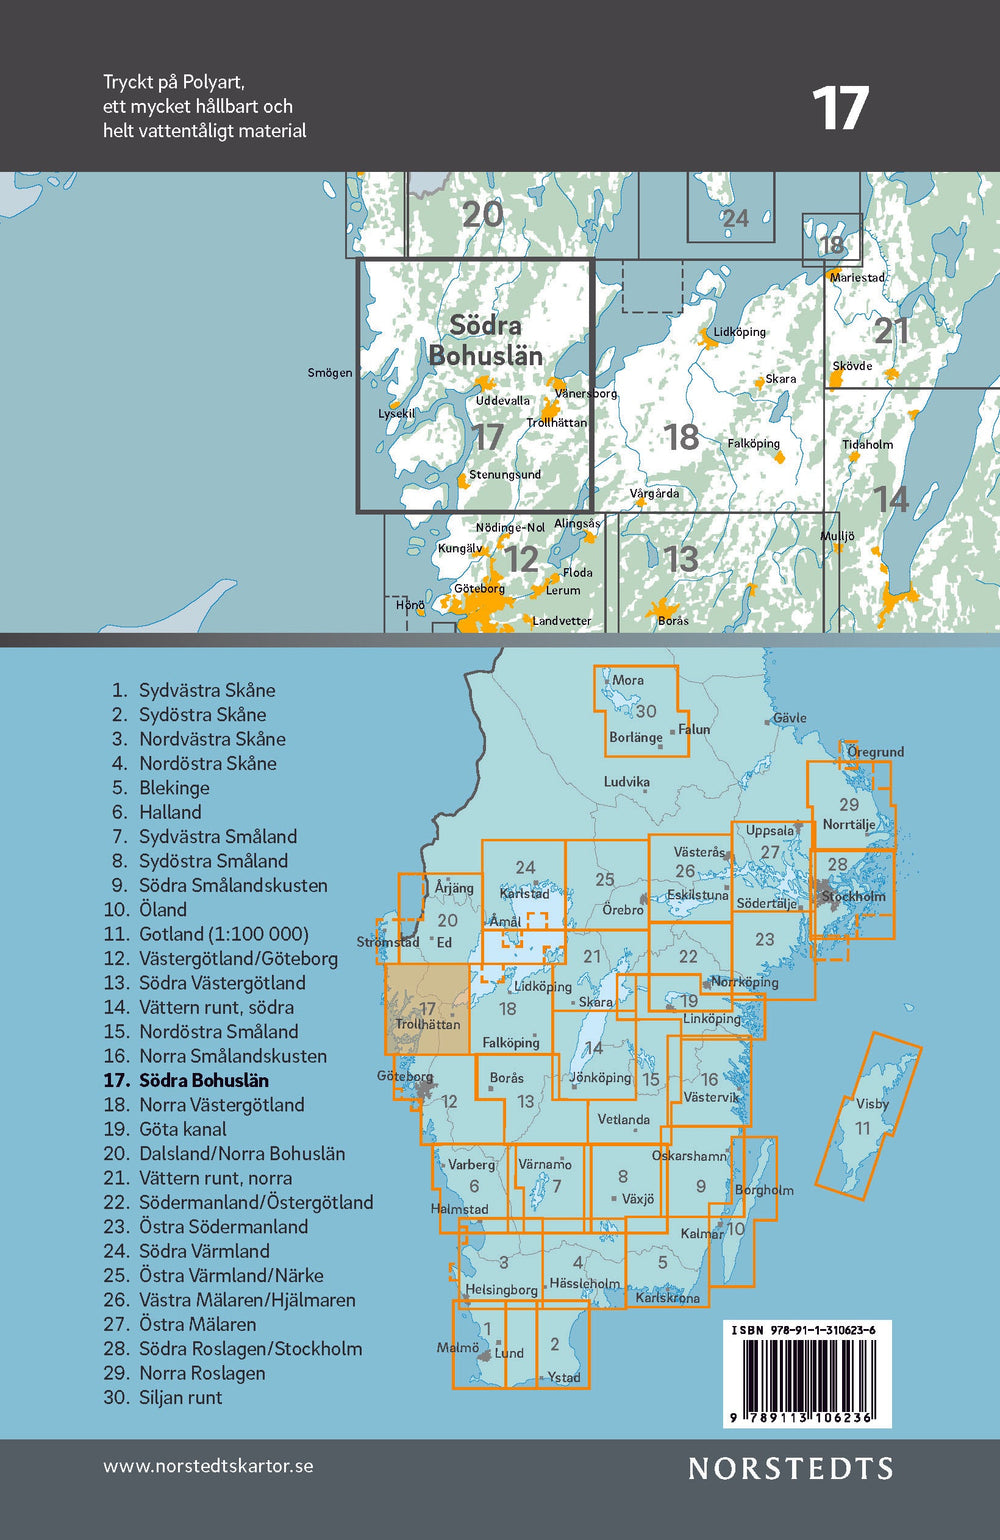 Carte cycliste n° 17 - Bohuslän Sud (Suède) | Norstedts carte pliée Norstedts 